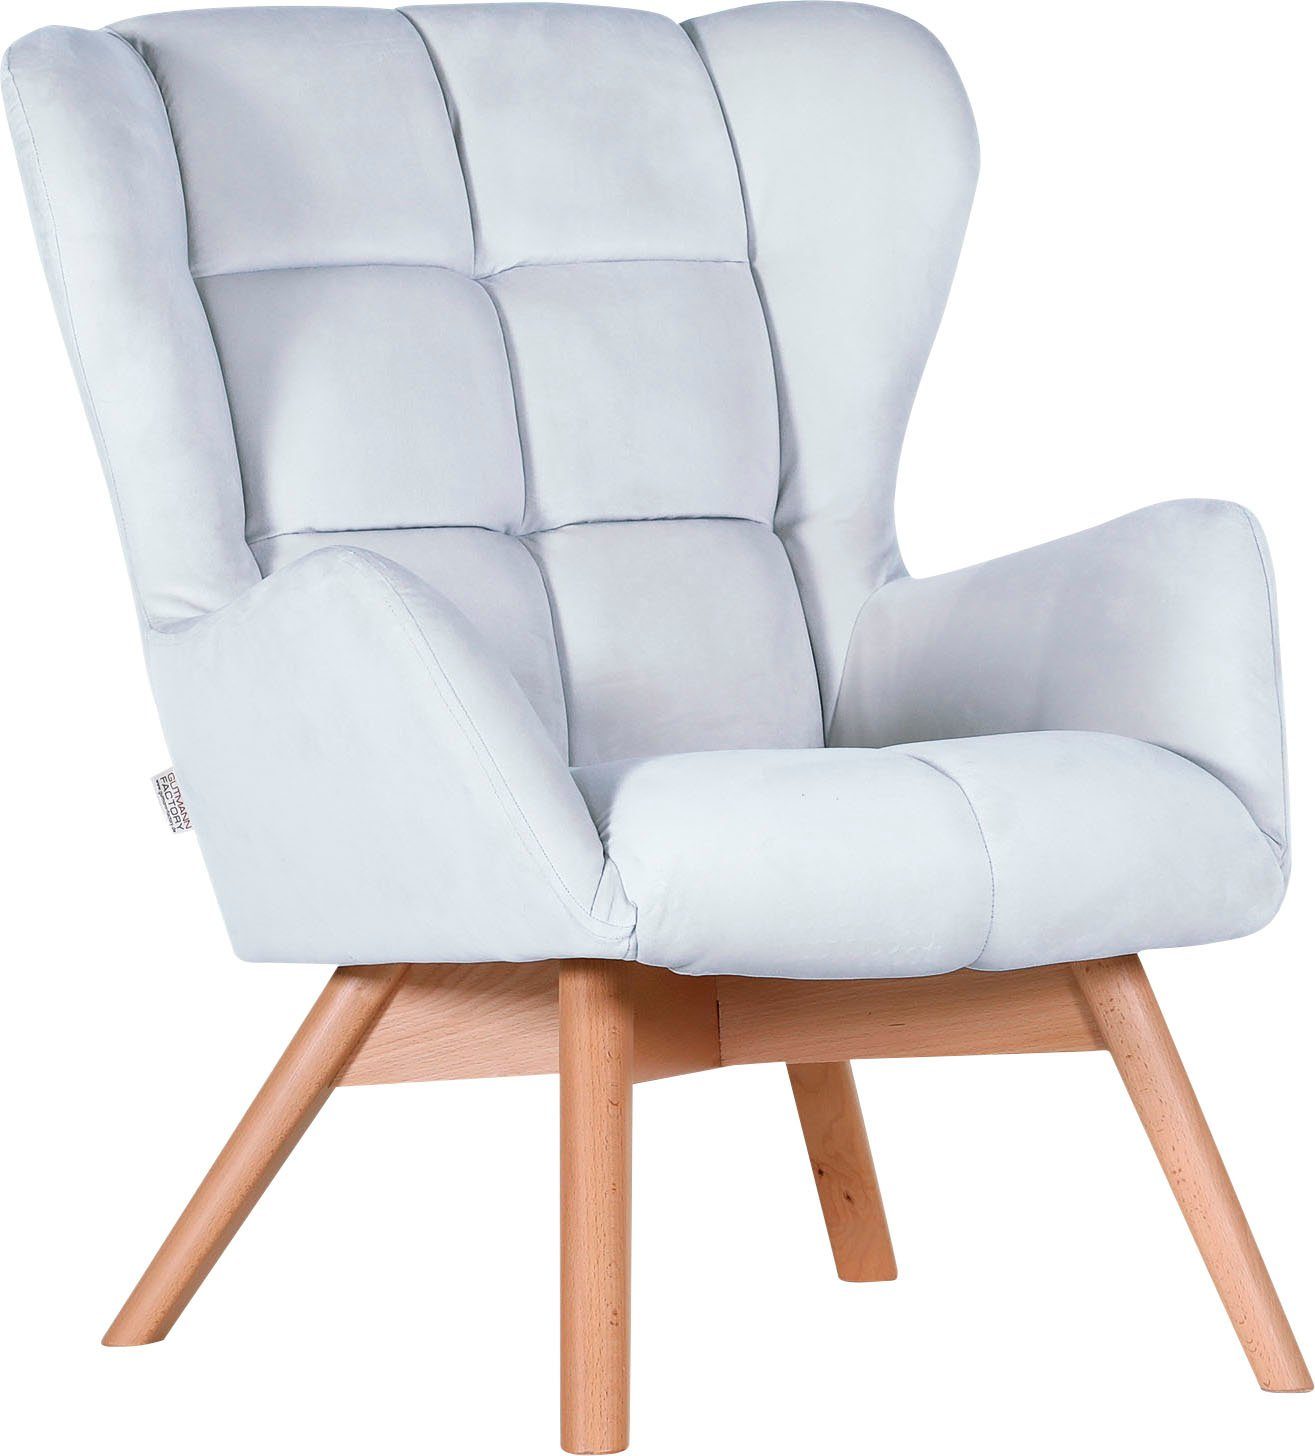 Gutmann Factory Sessel Luna, Gestell eiche natur oder antikfarben